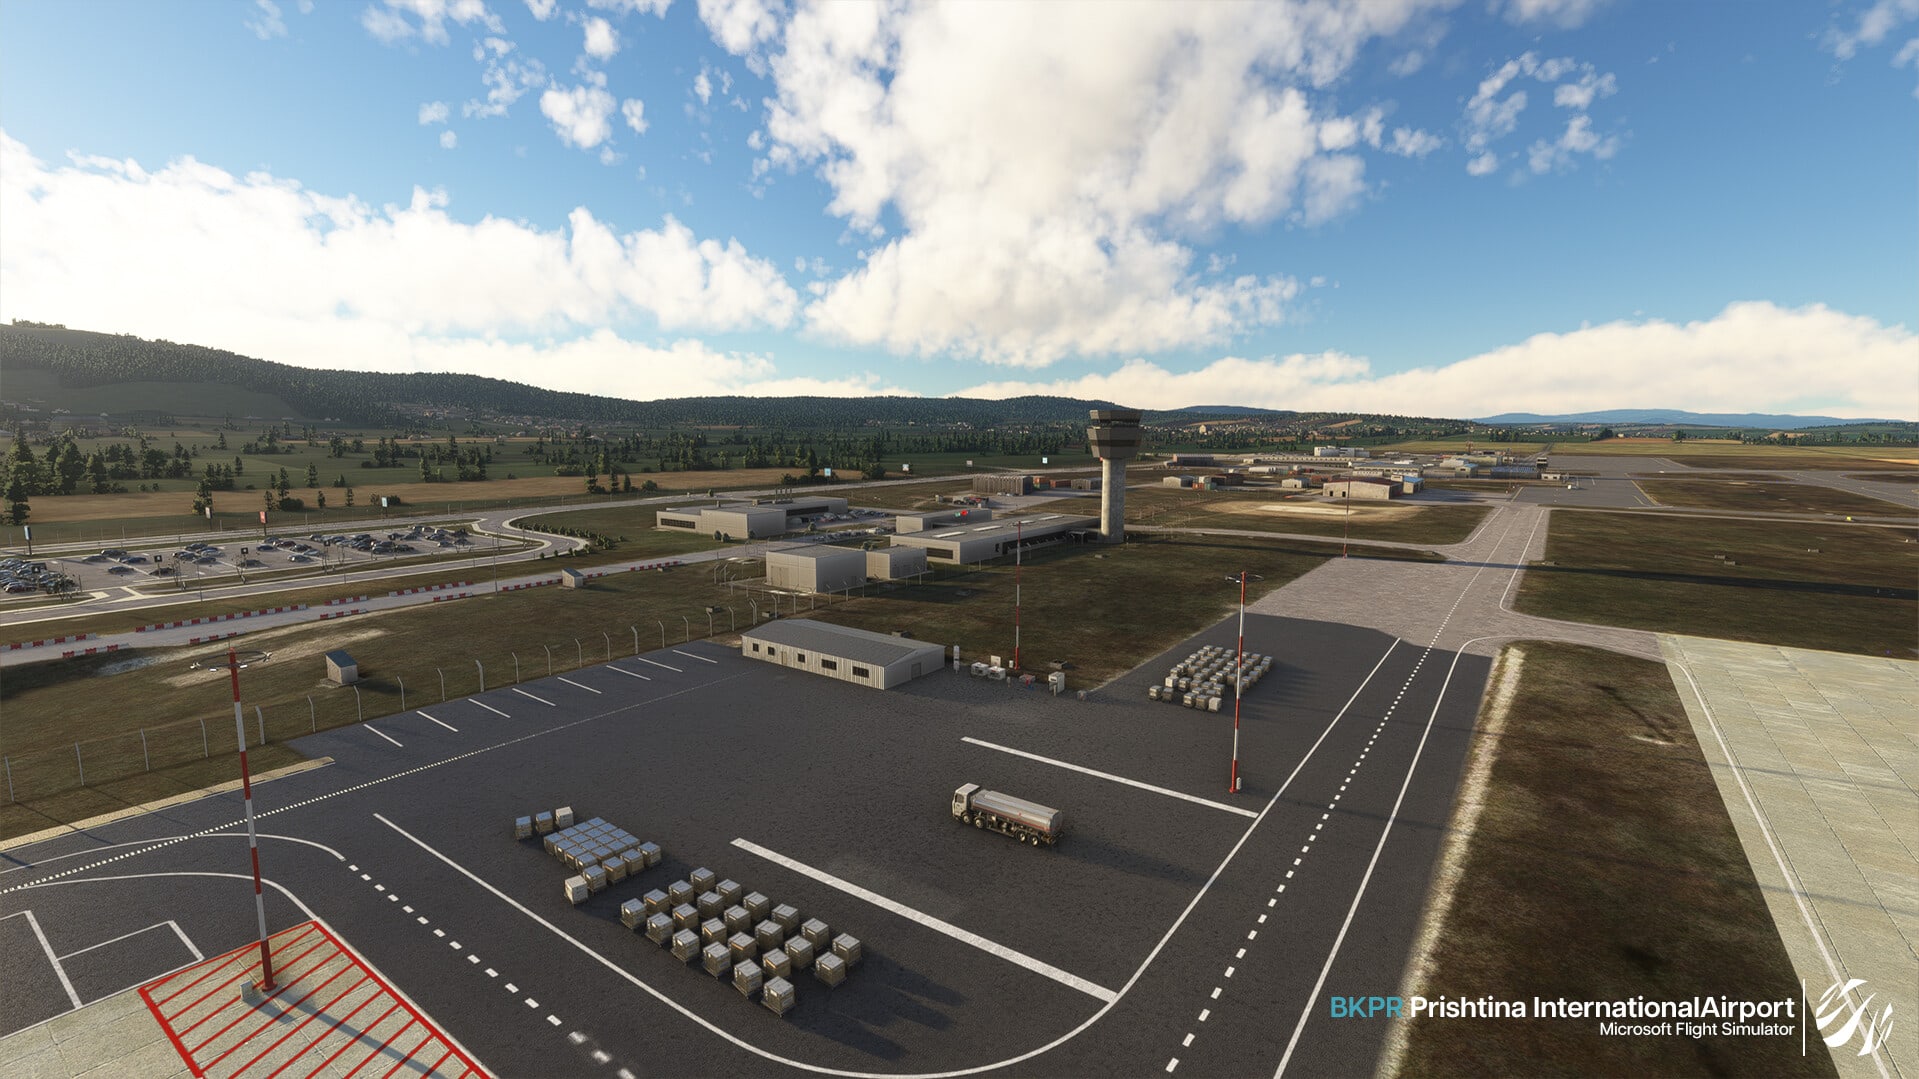 M'M Simulations Released Prishtina Airport for MSFS - Microsoft Flight Simulator, Miltech Simulations, Orbx